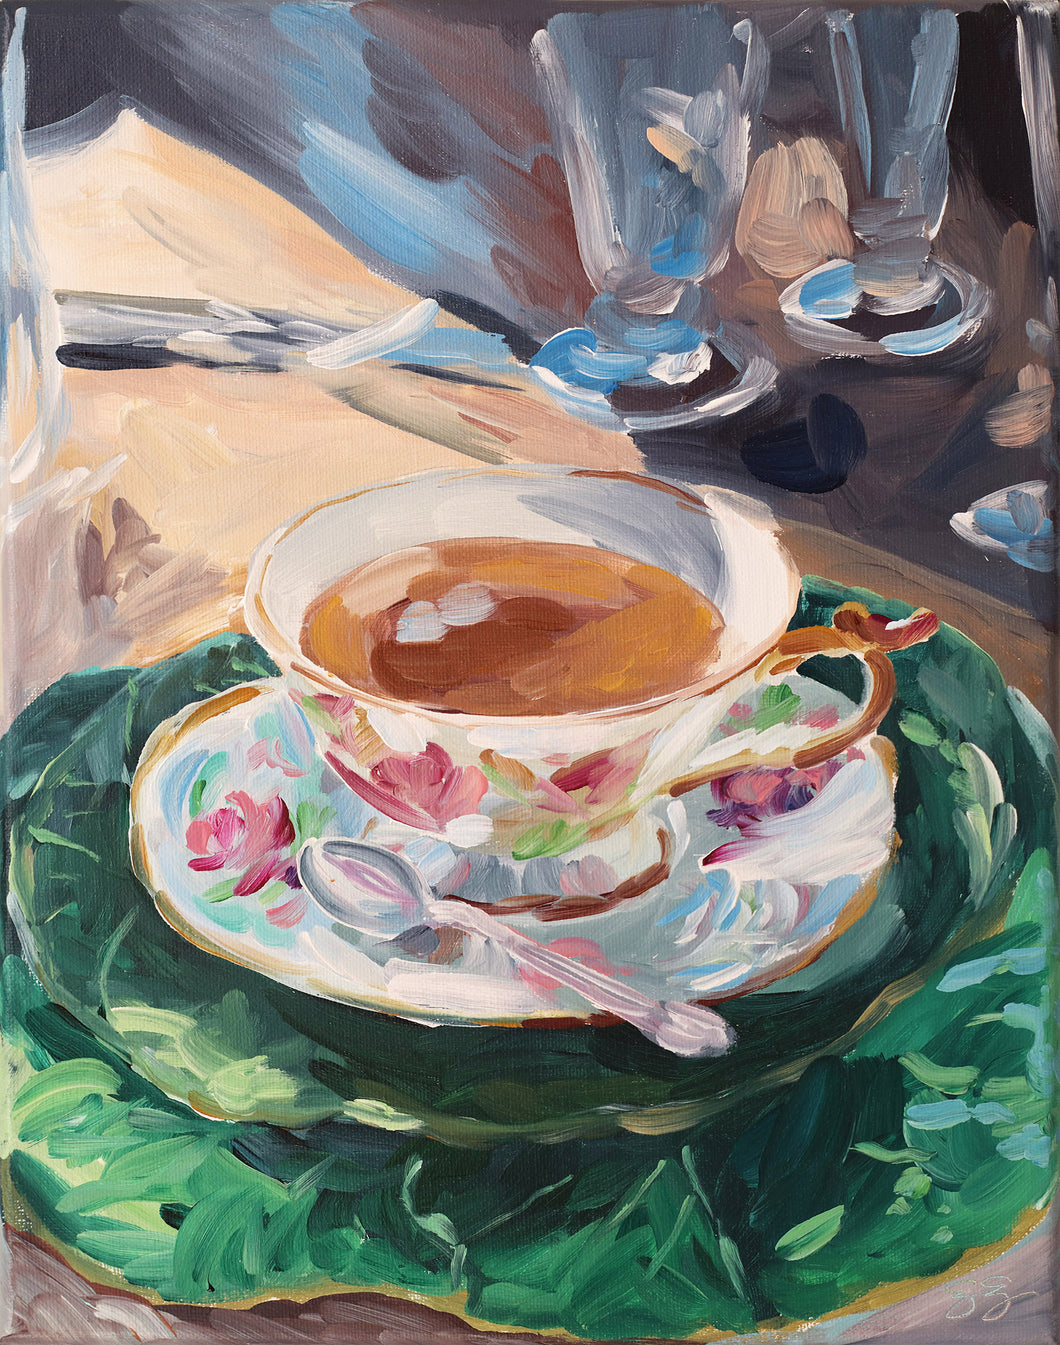 Elizabeth Alice Studio original painting art, sun shining on a cup of tea, antique tea cup art, cabbage plate painting, original tea time art, small original painting, acrylic painting wet on wet, expressive brush strokes, impressionist style